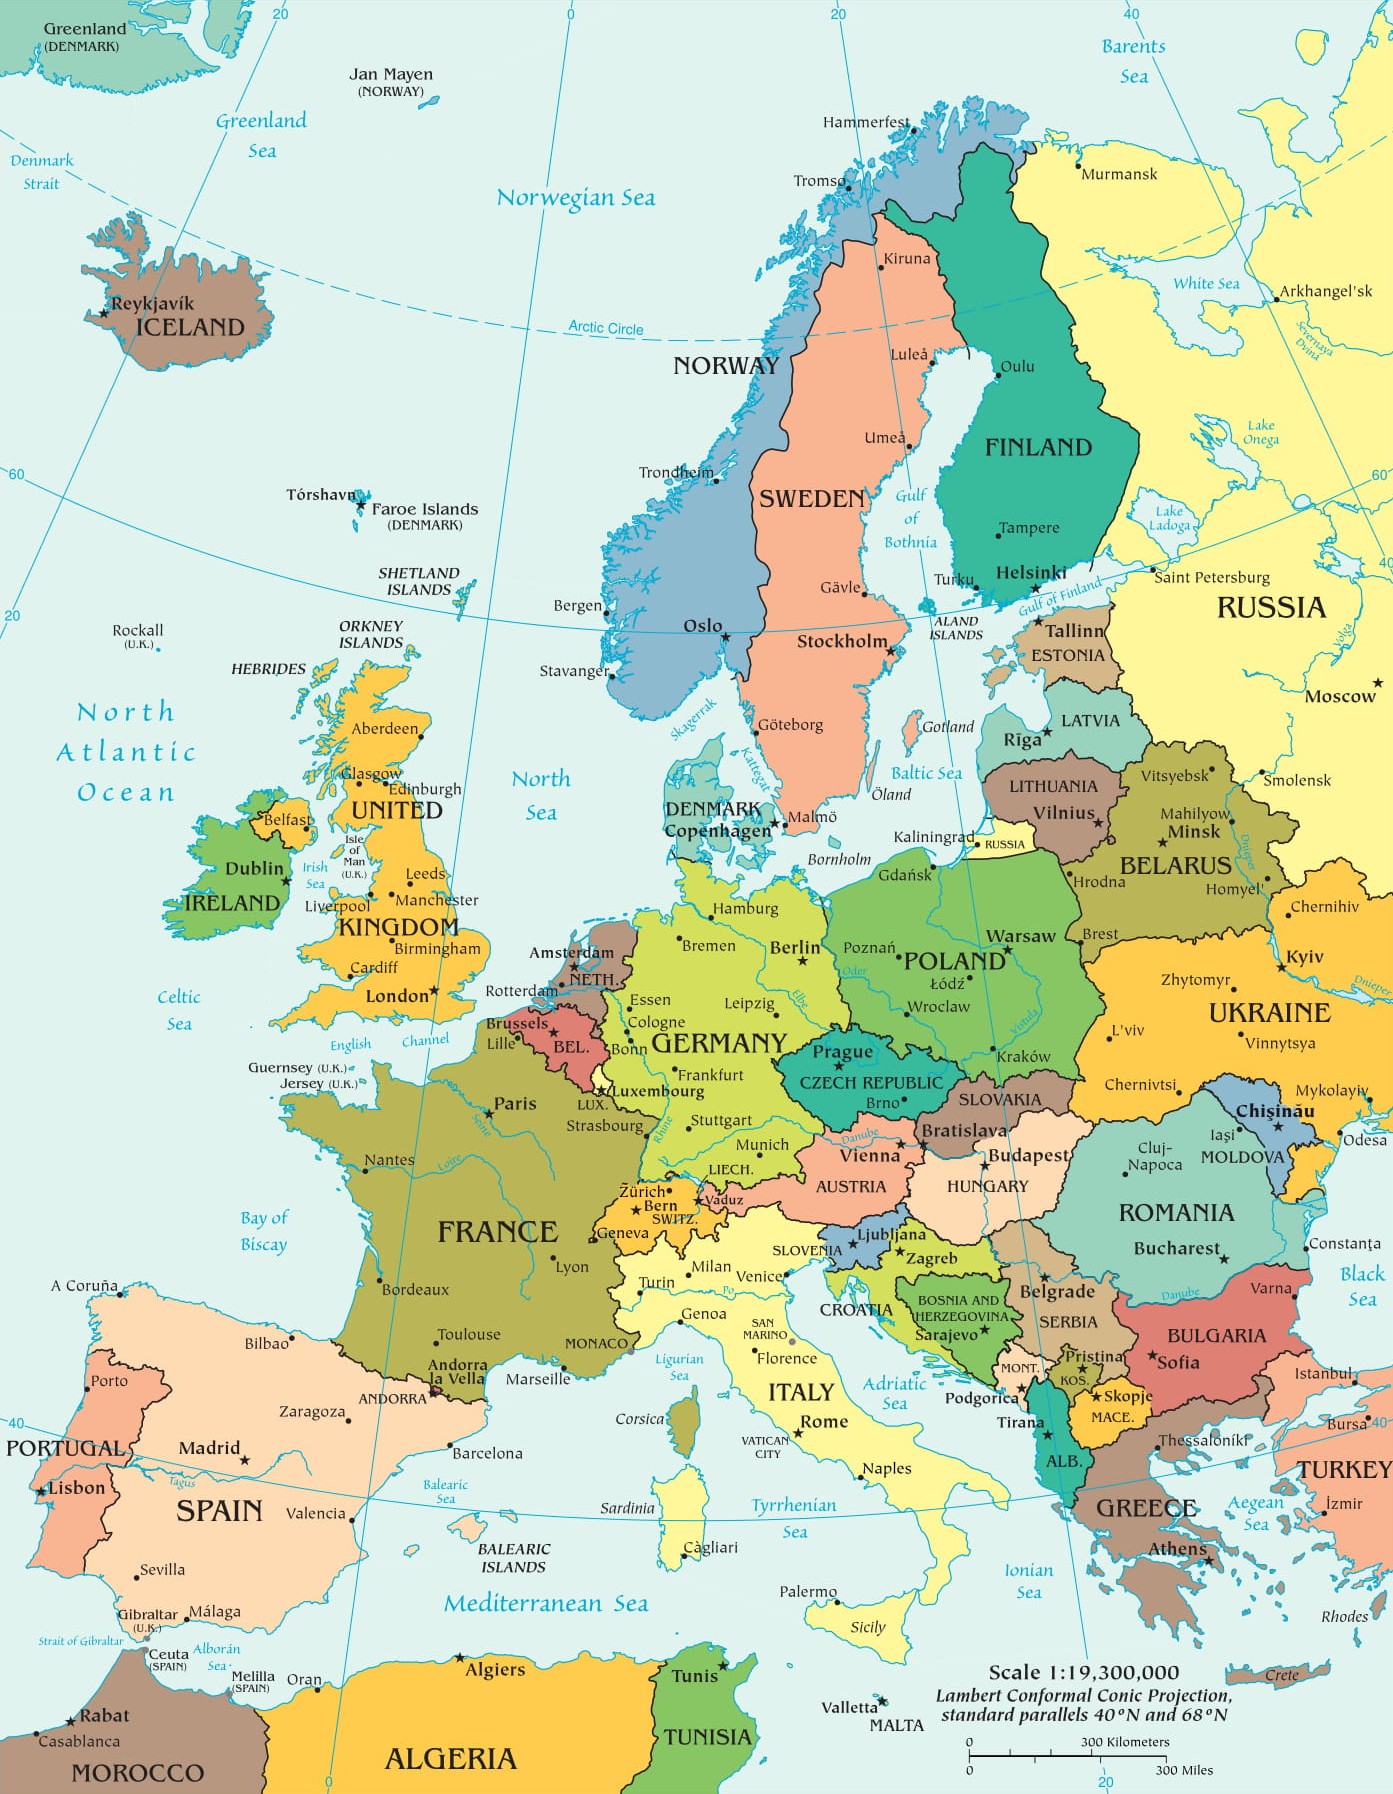 Geografia da Europa - aspectos físicos, econômicos, culturais e